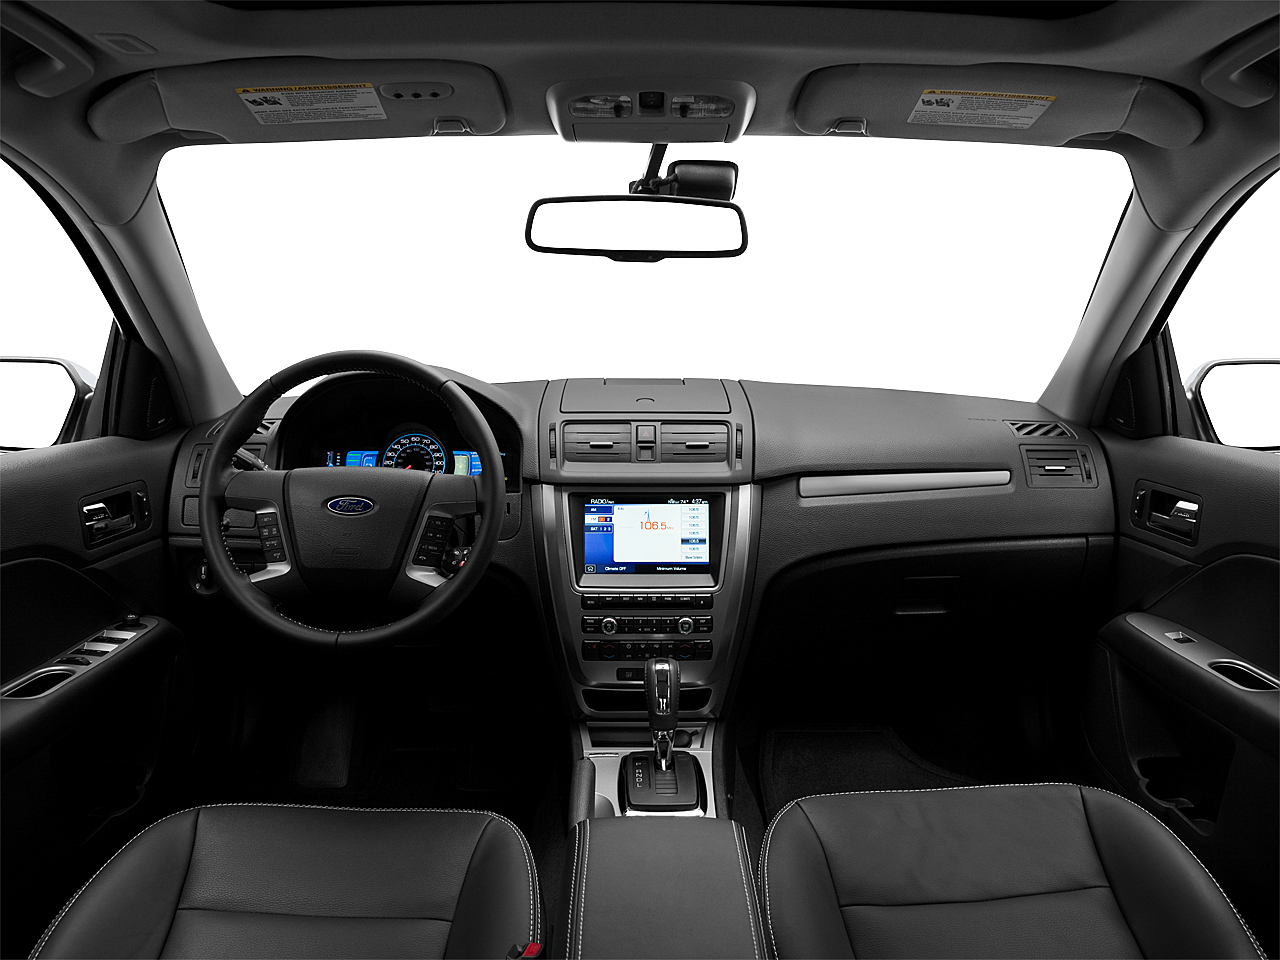 2011 Ford Fusion Hybrid 4dr Sedan - Research - GrooveCar